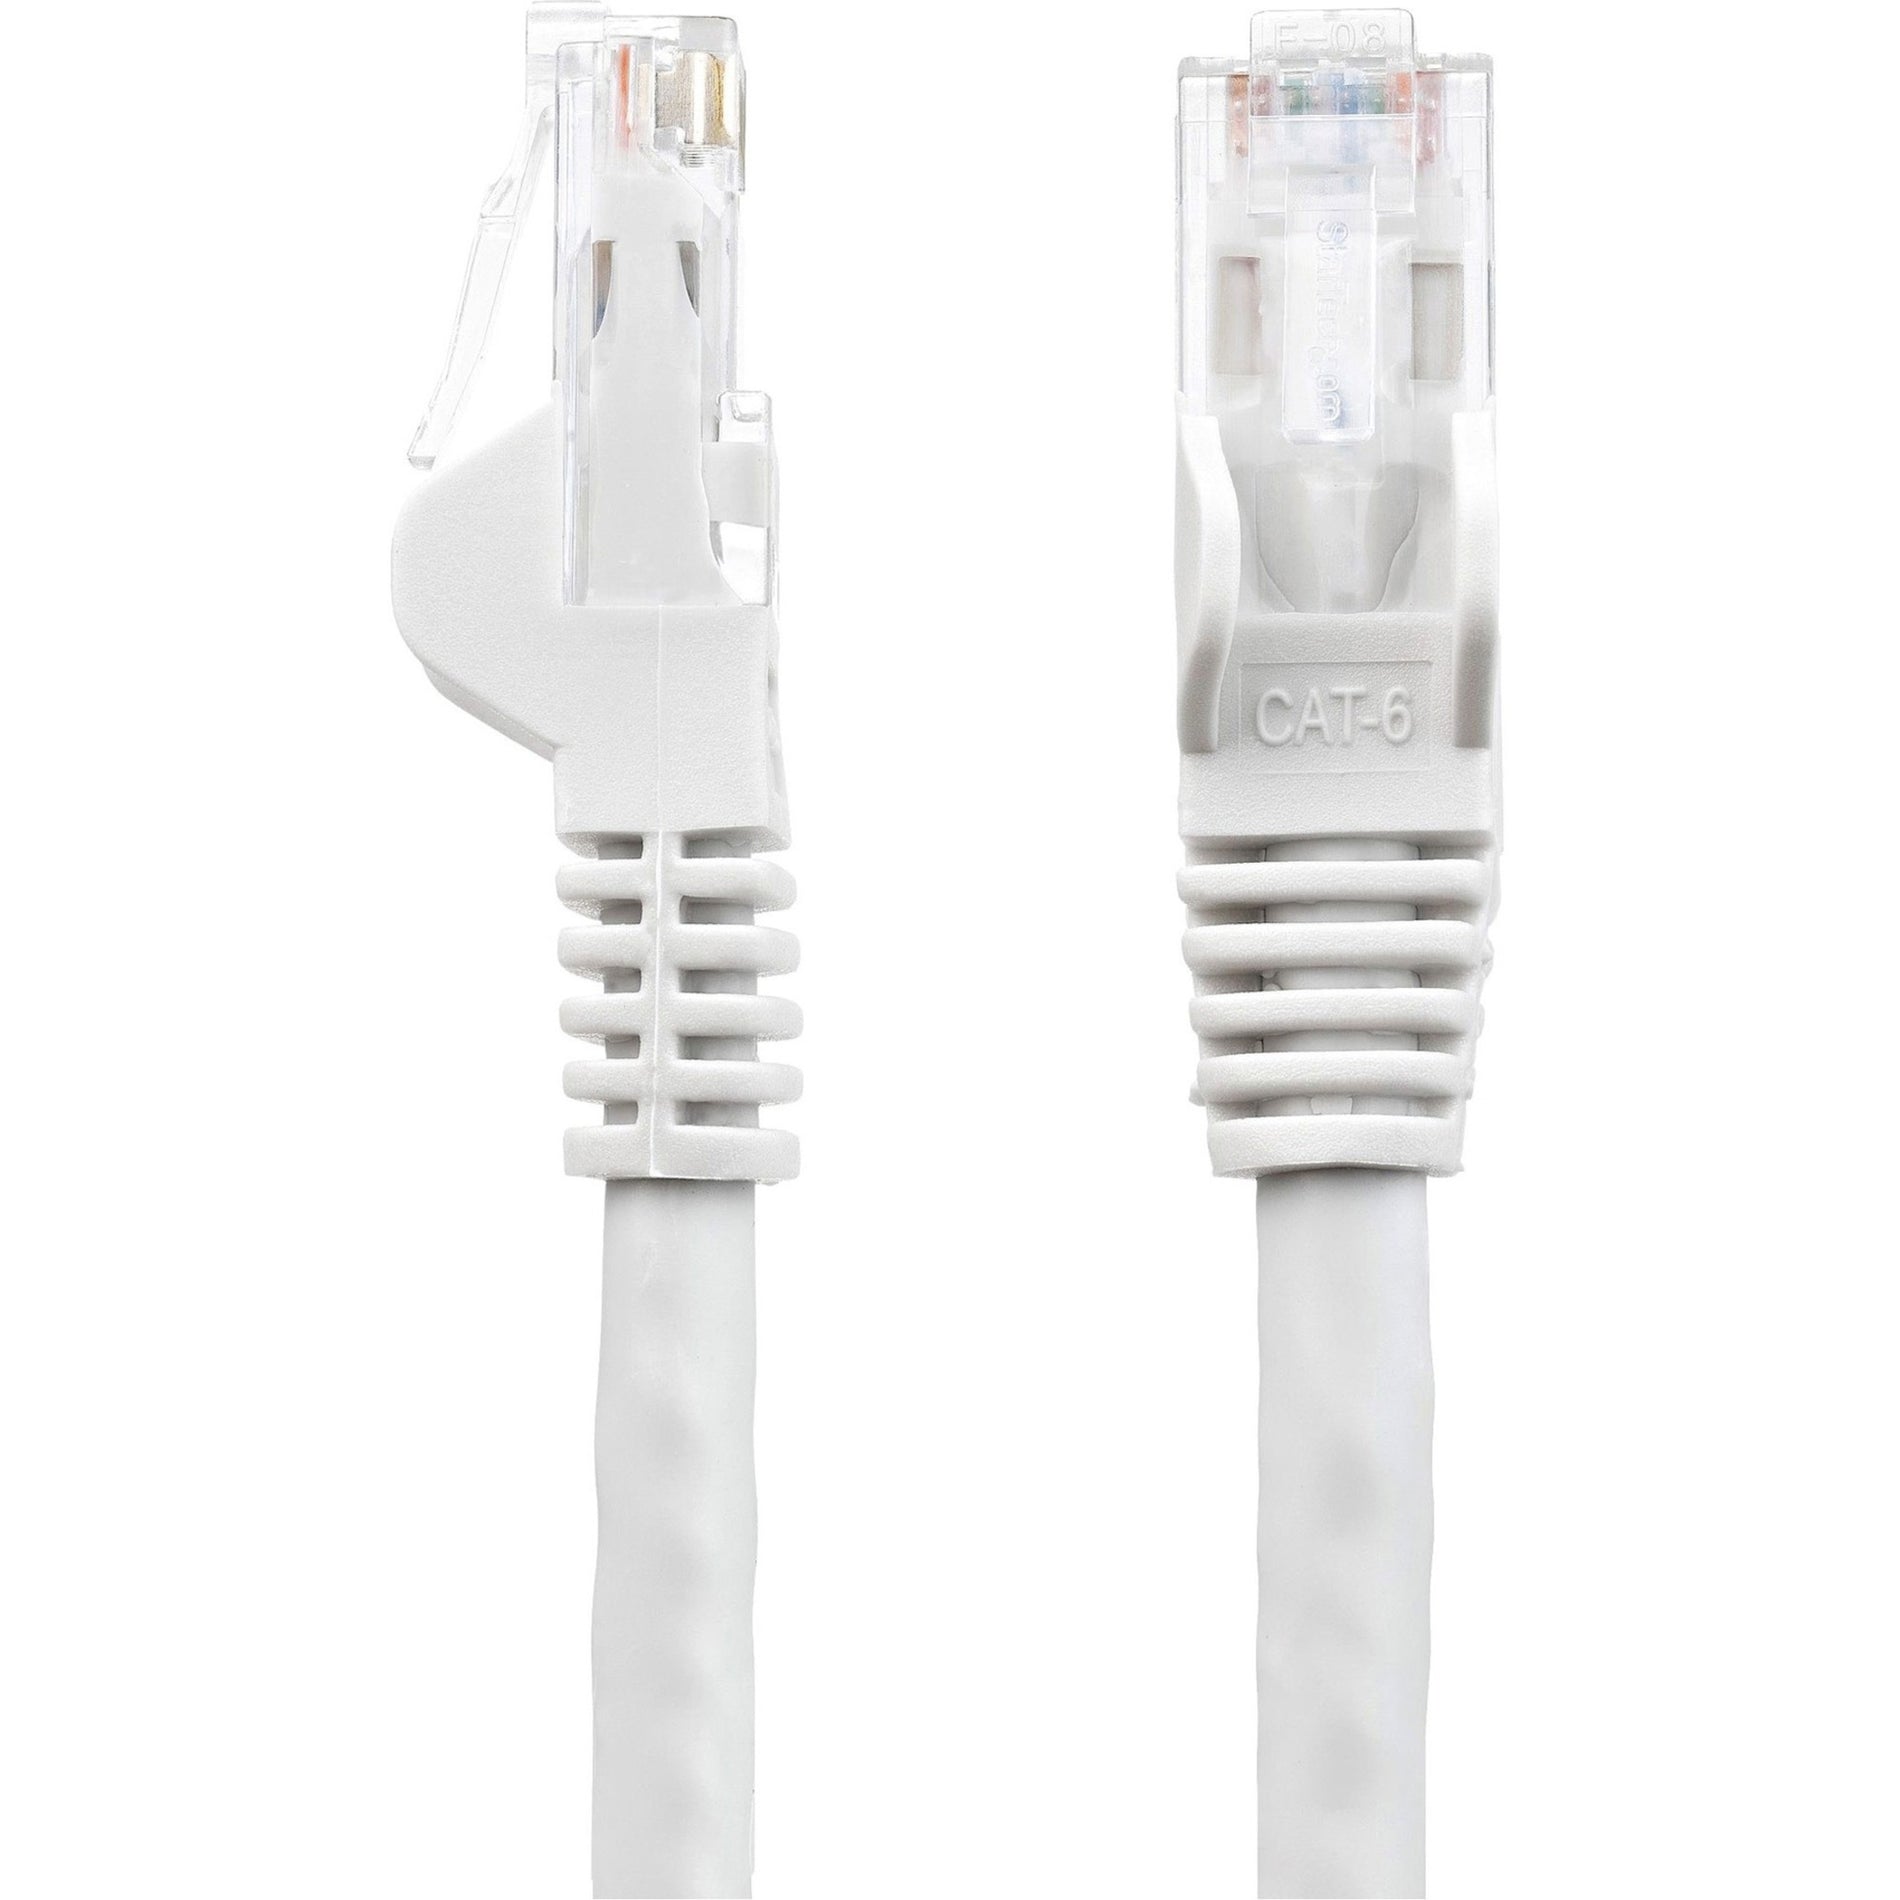 Marca: StarTech.com Cable de parche UTP Cat6 sin enganches blanco de 7 pies con garantía de por vida verificado por ETL